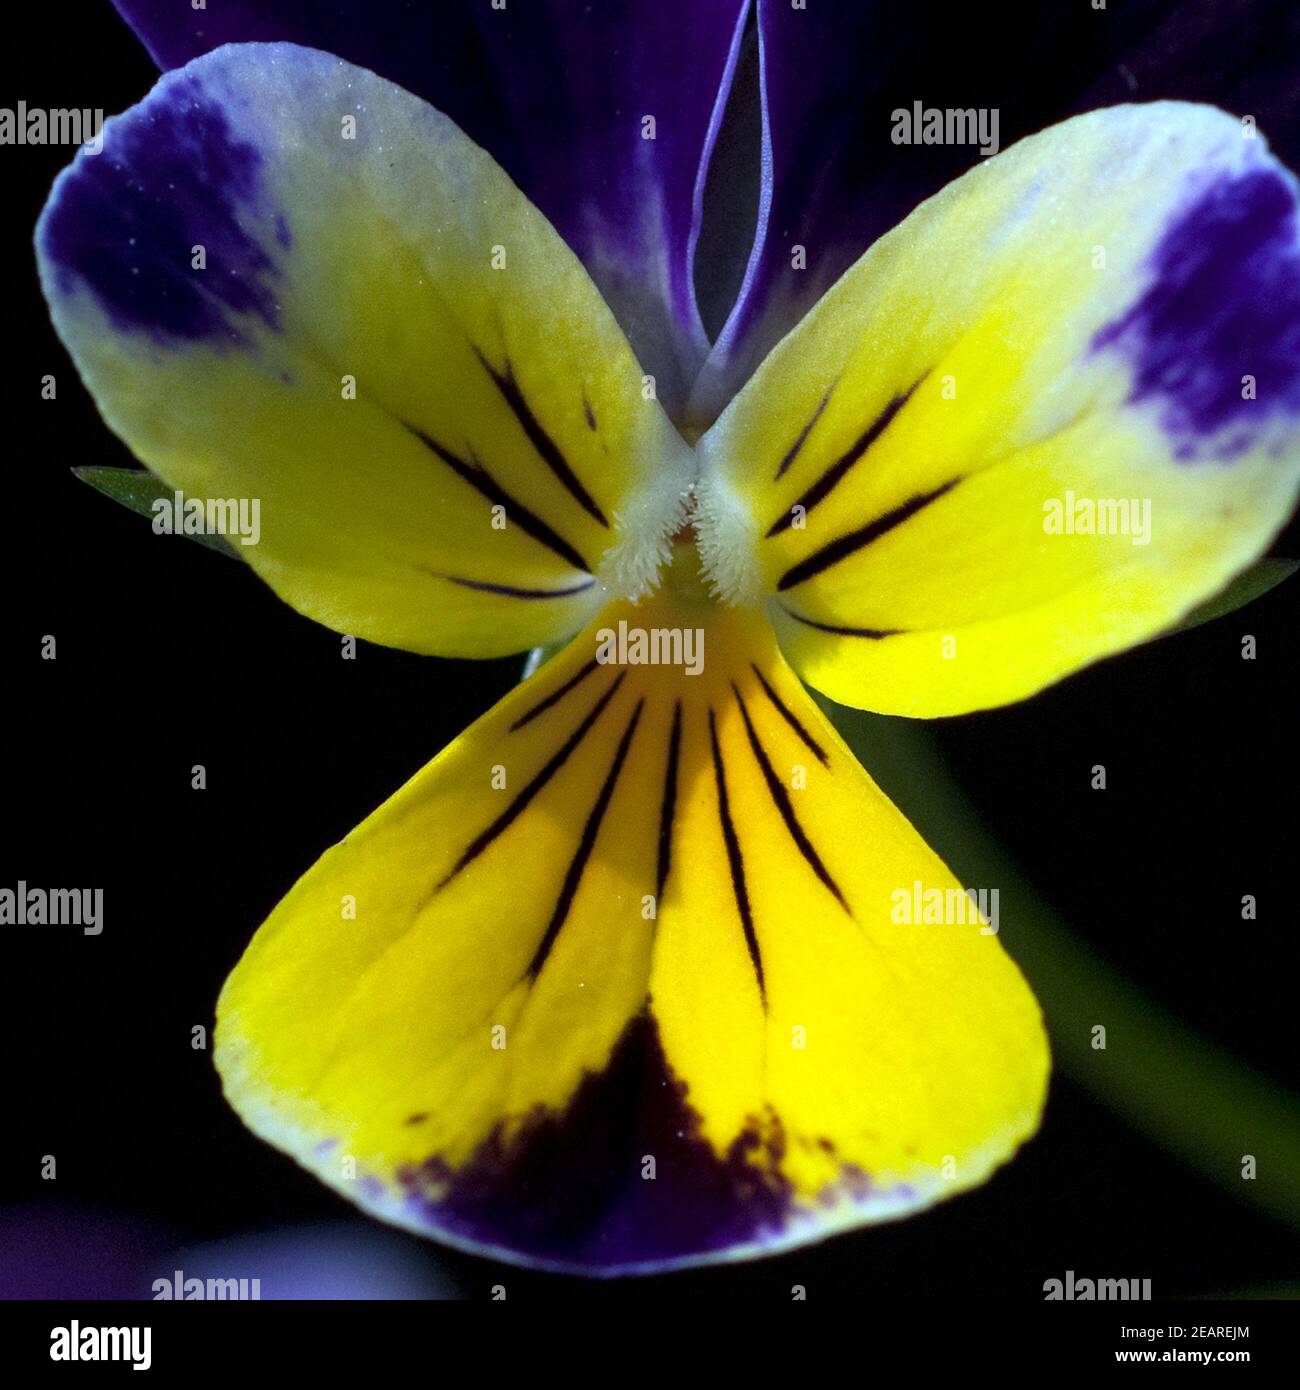 Stiefmuetterchen, Viola tricolor Foto de stock